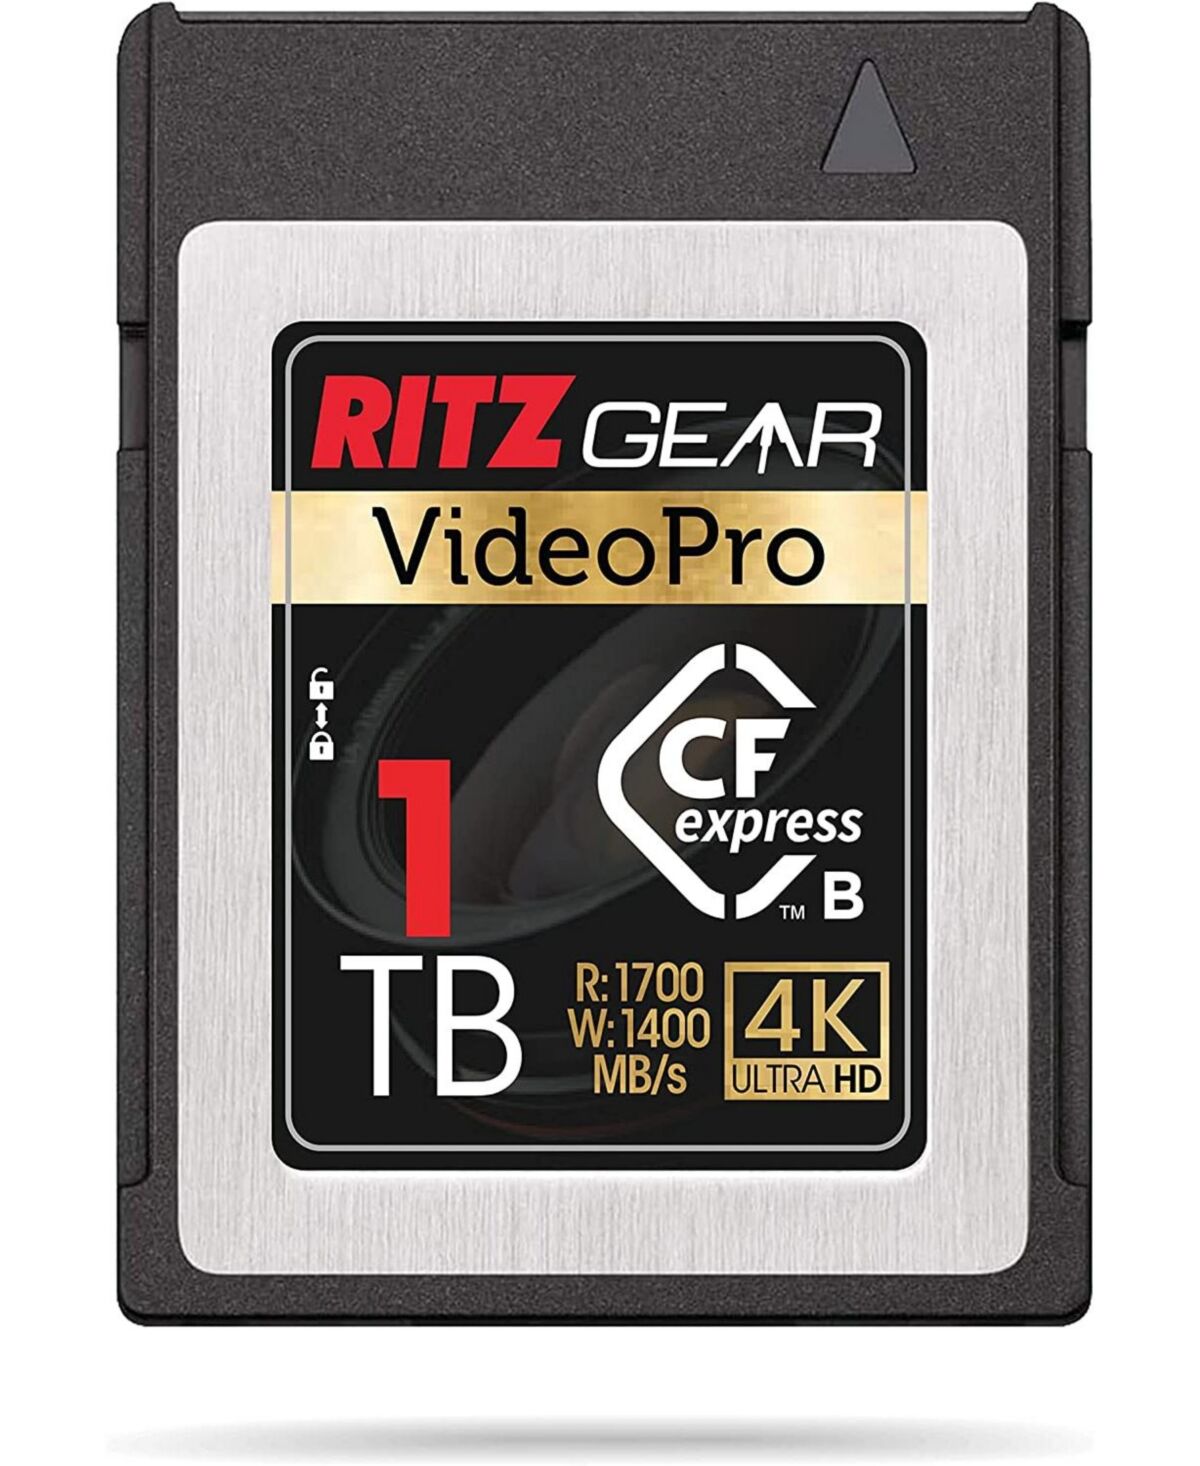 Ritz Gear Video Pro CFExpress Type B 1TB Compatible Dslr Cameras - Black